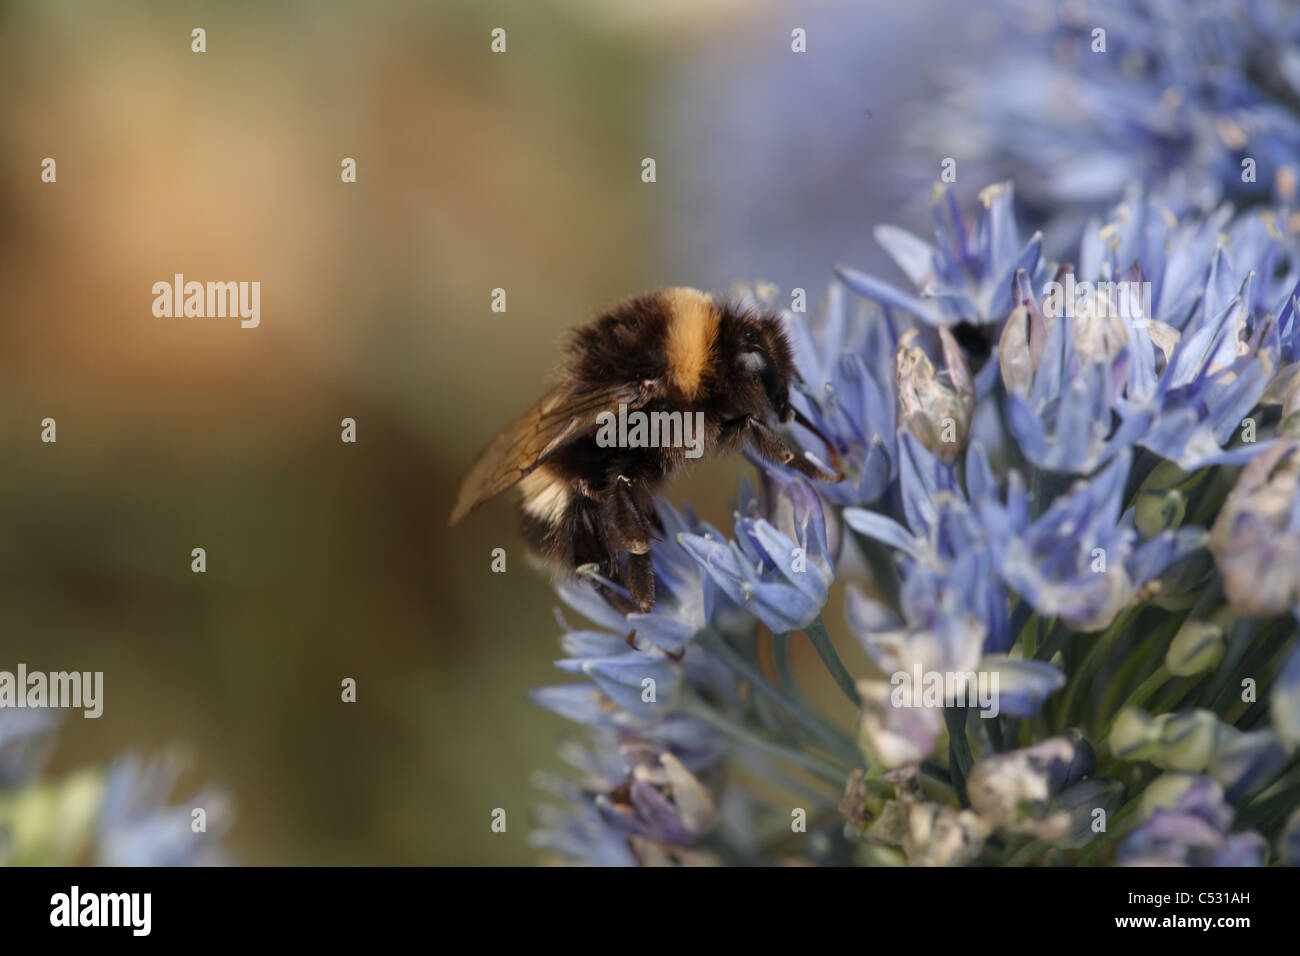 Macro of a Buff-tailed Bumblebee (Bombus terrestris) on an allium caeruleum flower, England Stock Photo